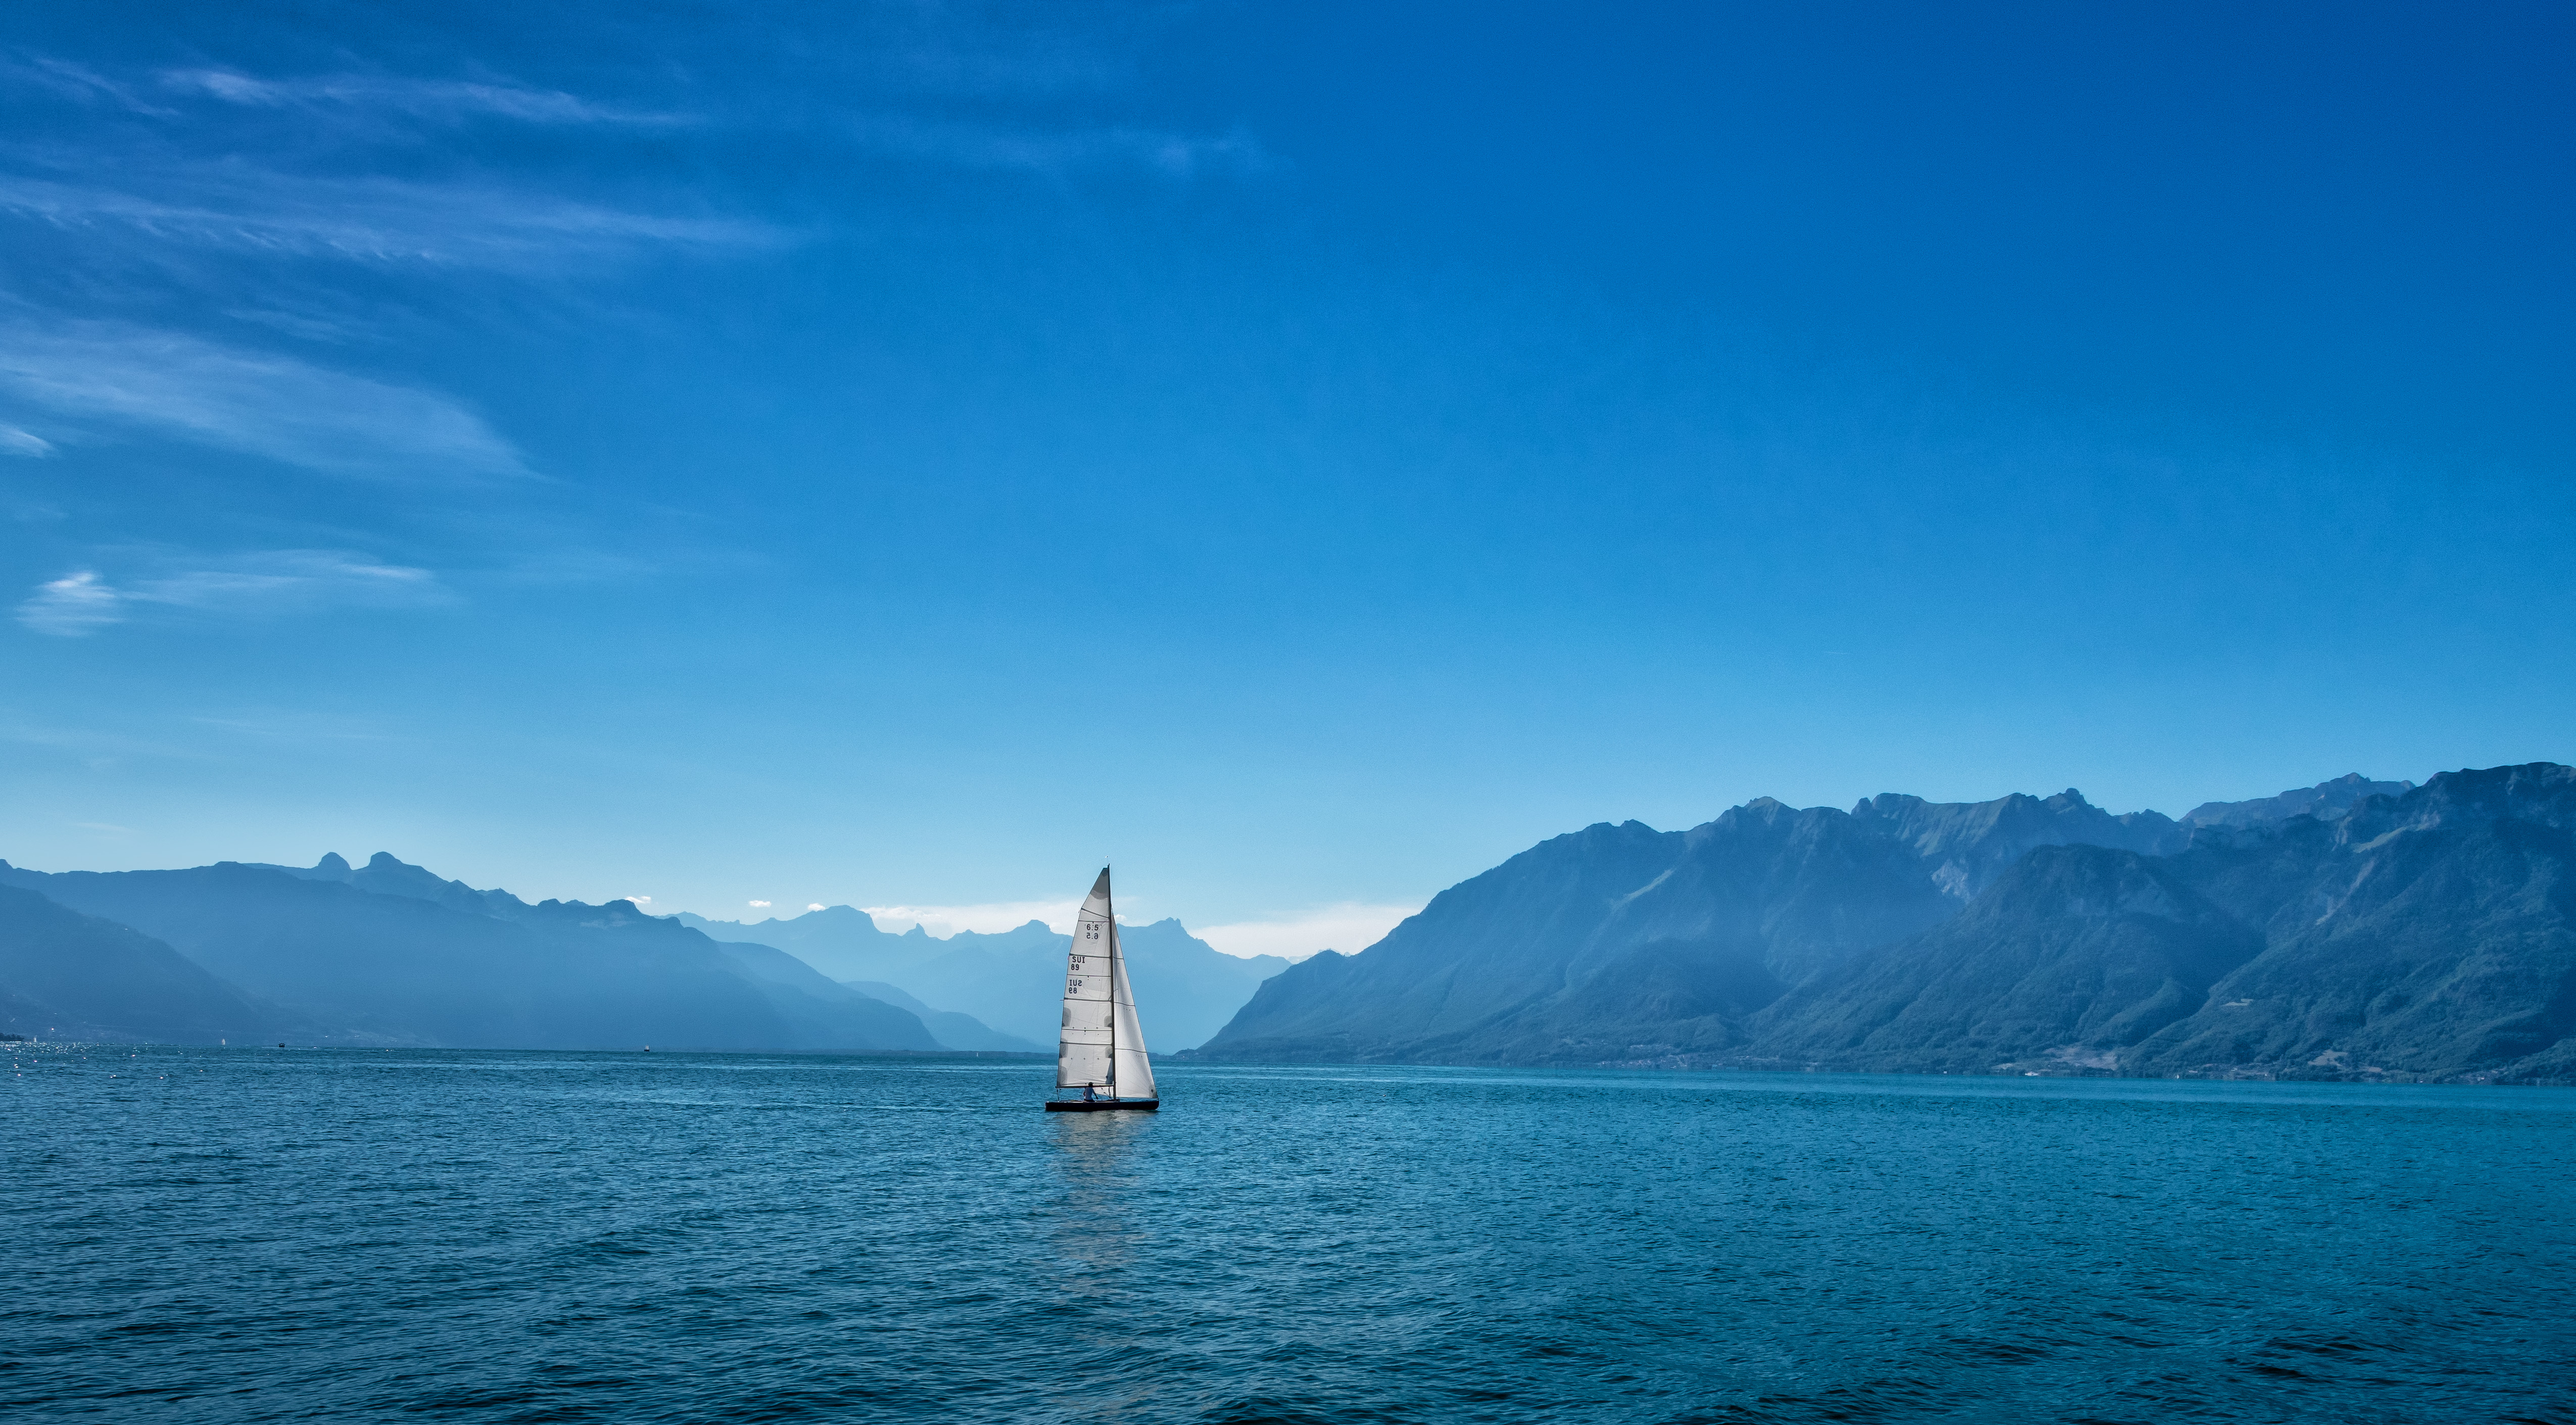 nature, sea, mountains, sailboat, sailfish, ship